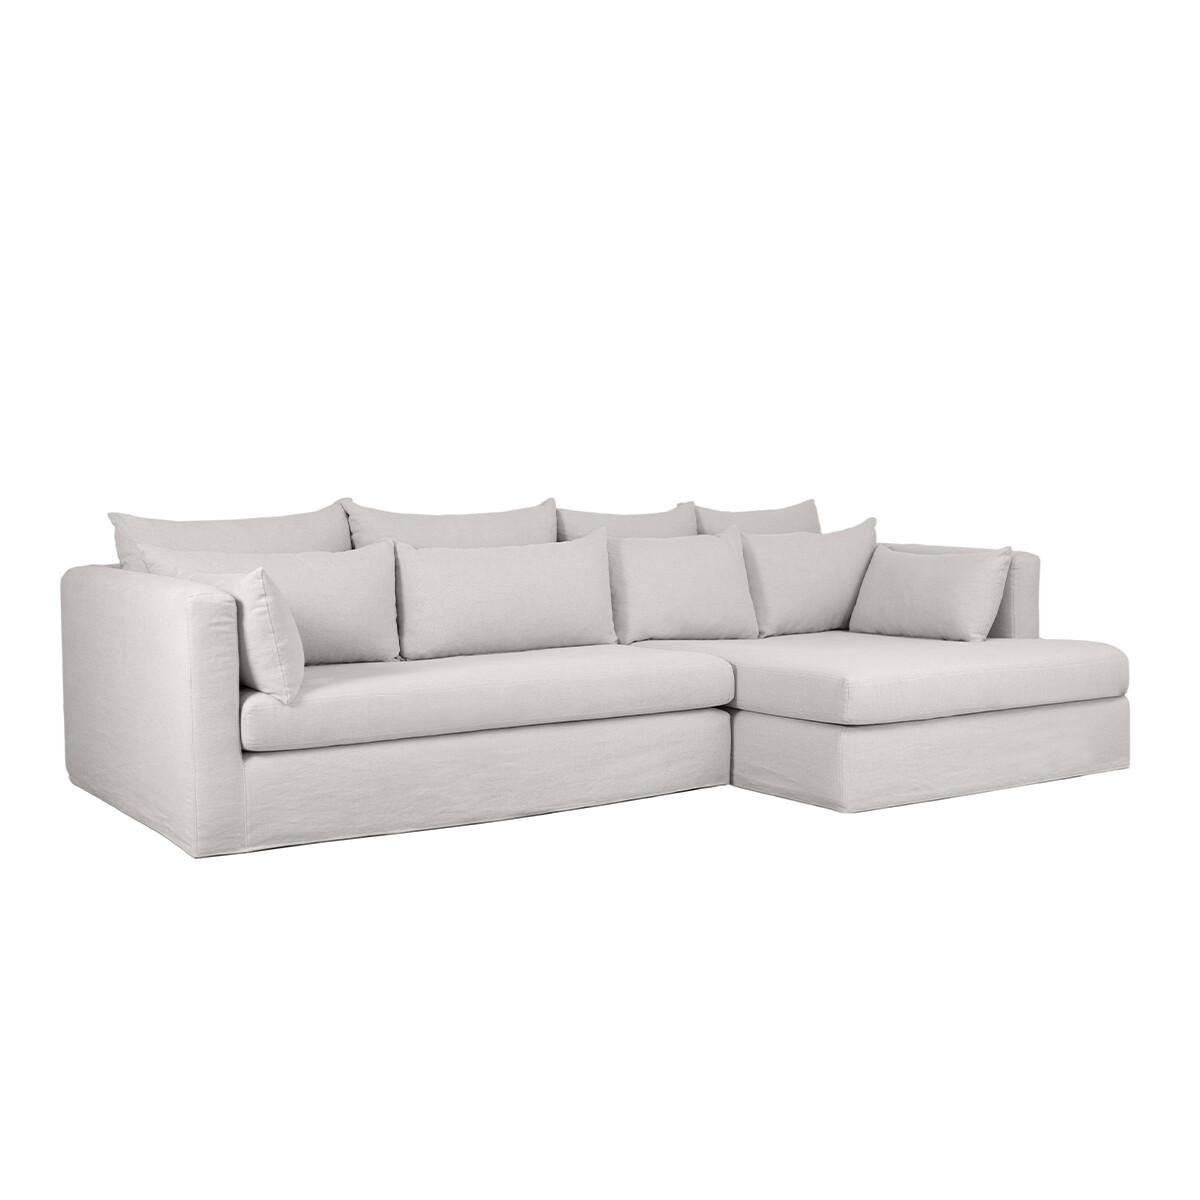 SuperBox corner sofa - Right angle, L335 x P180 x H85 cm - Linen - image 2